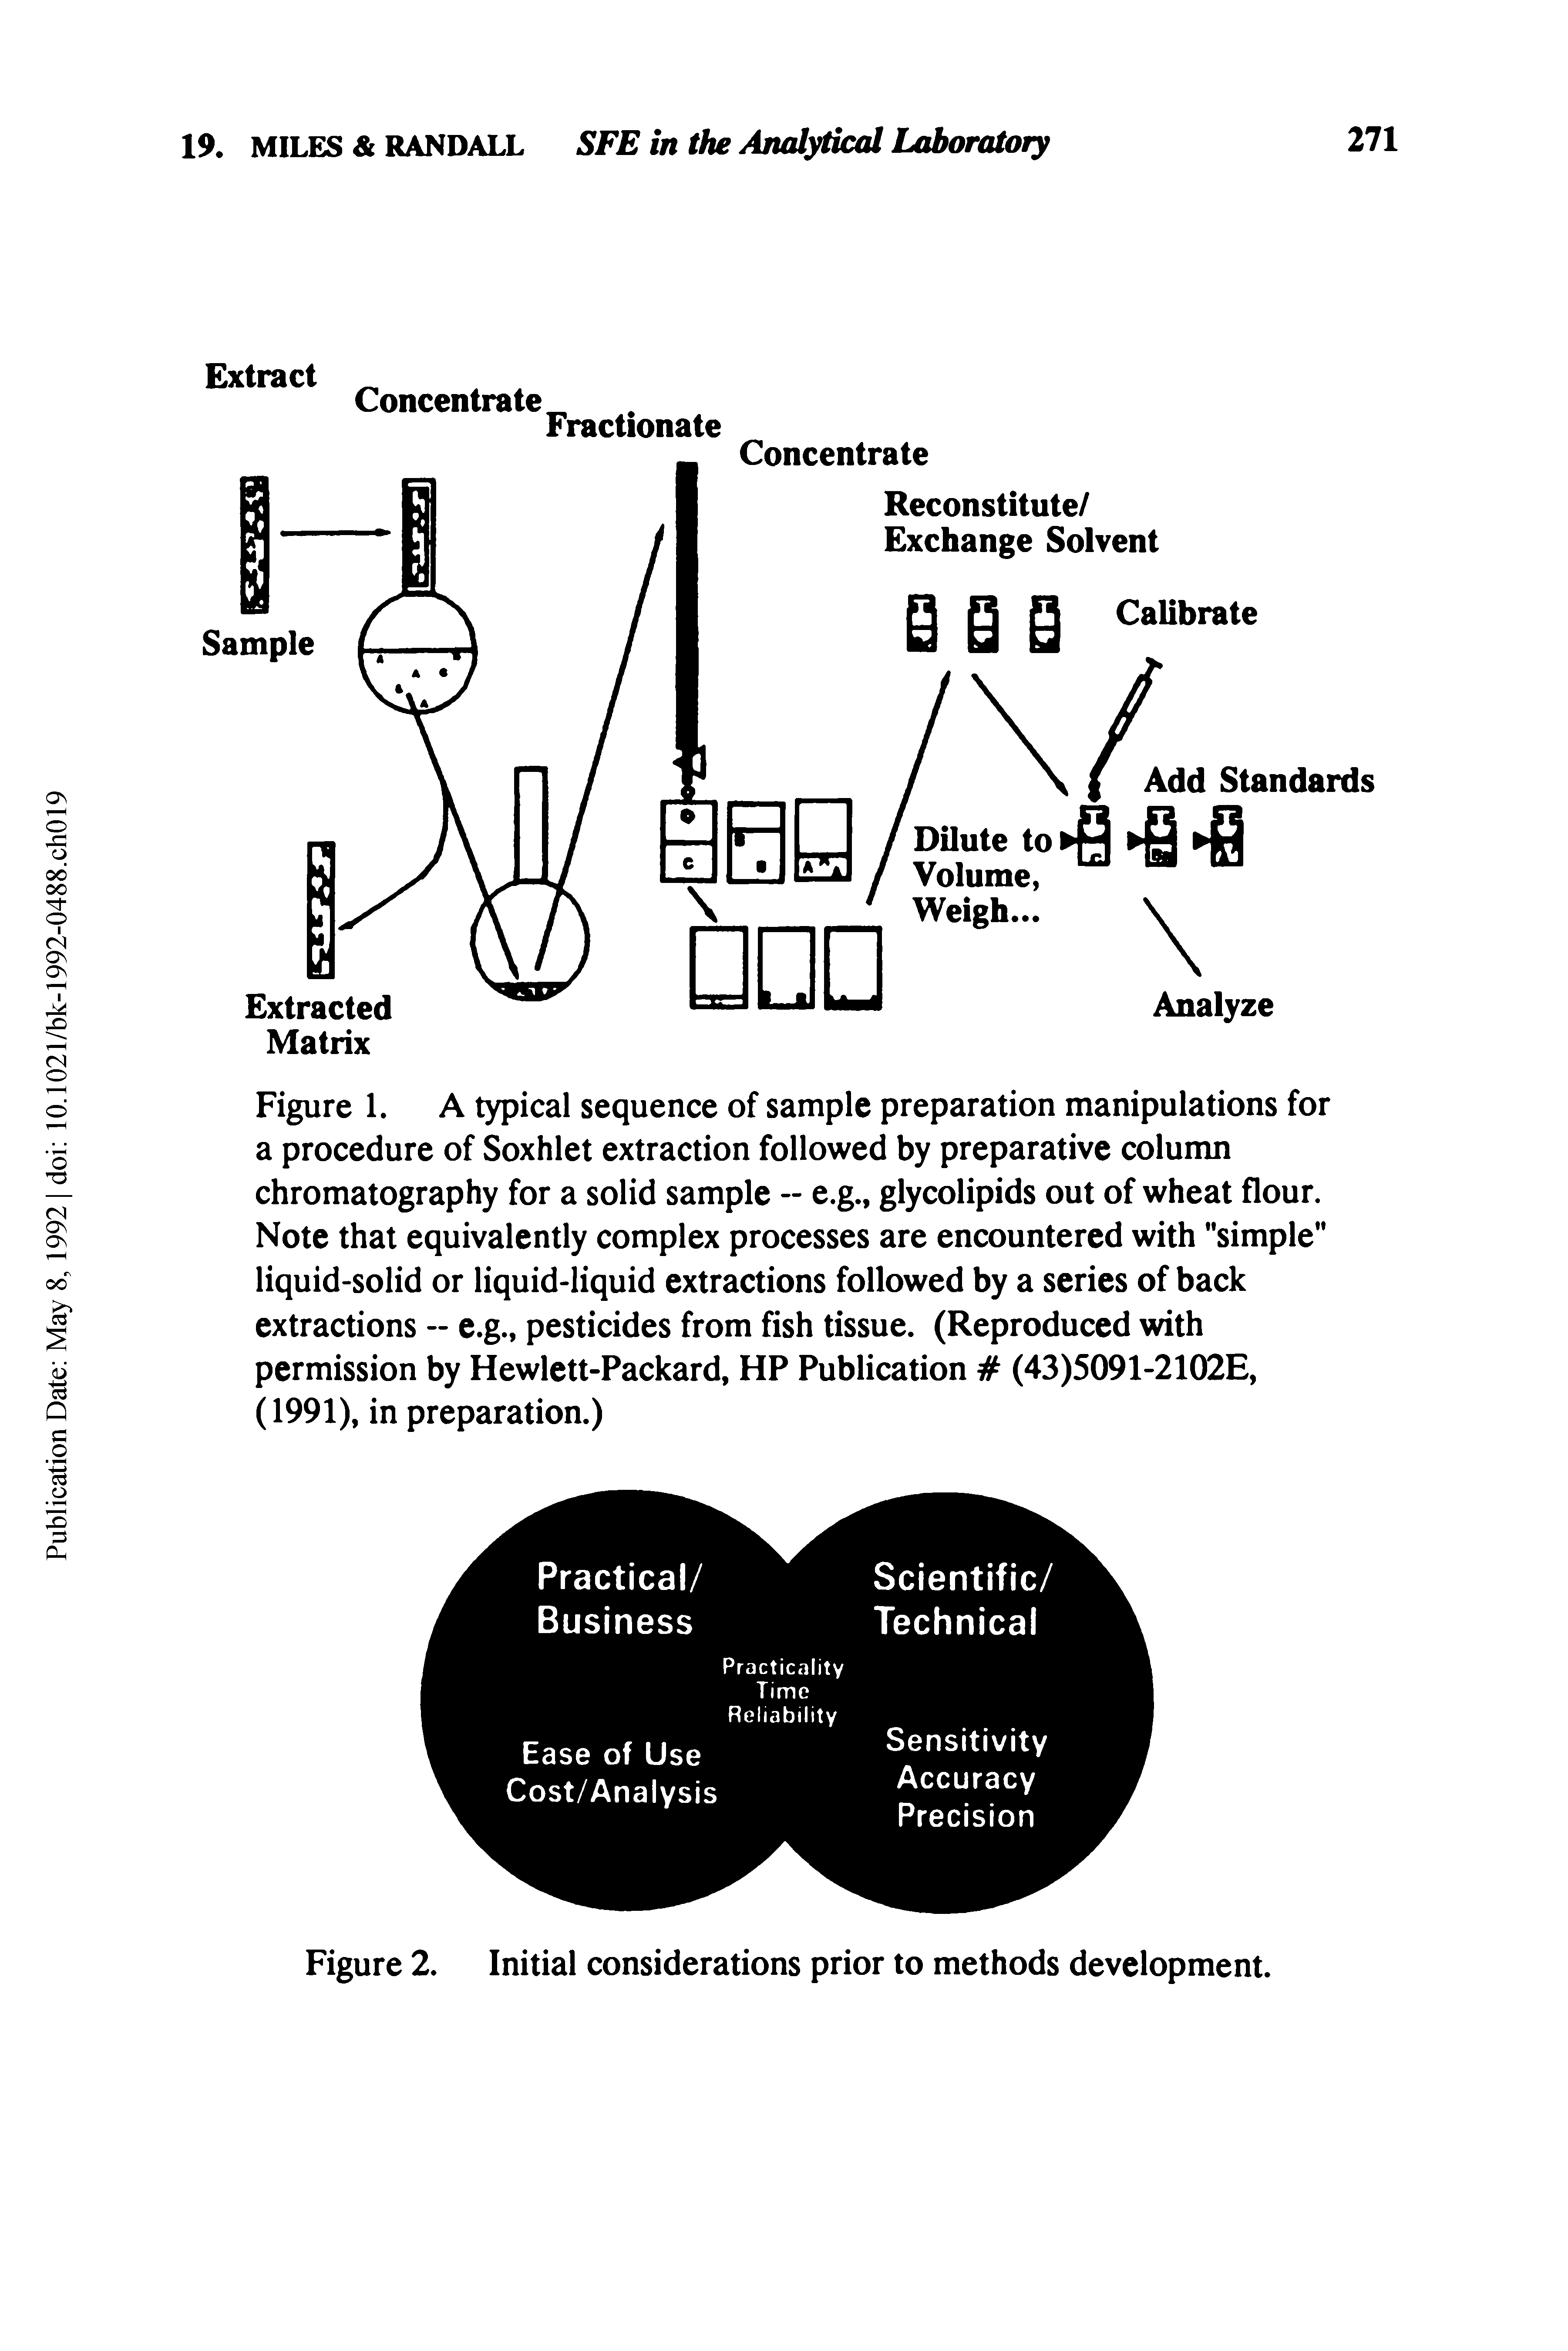 Figure 2. Initial considerations prior to methods development.